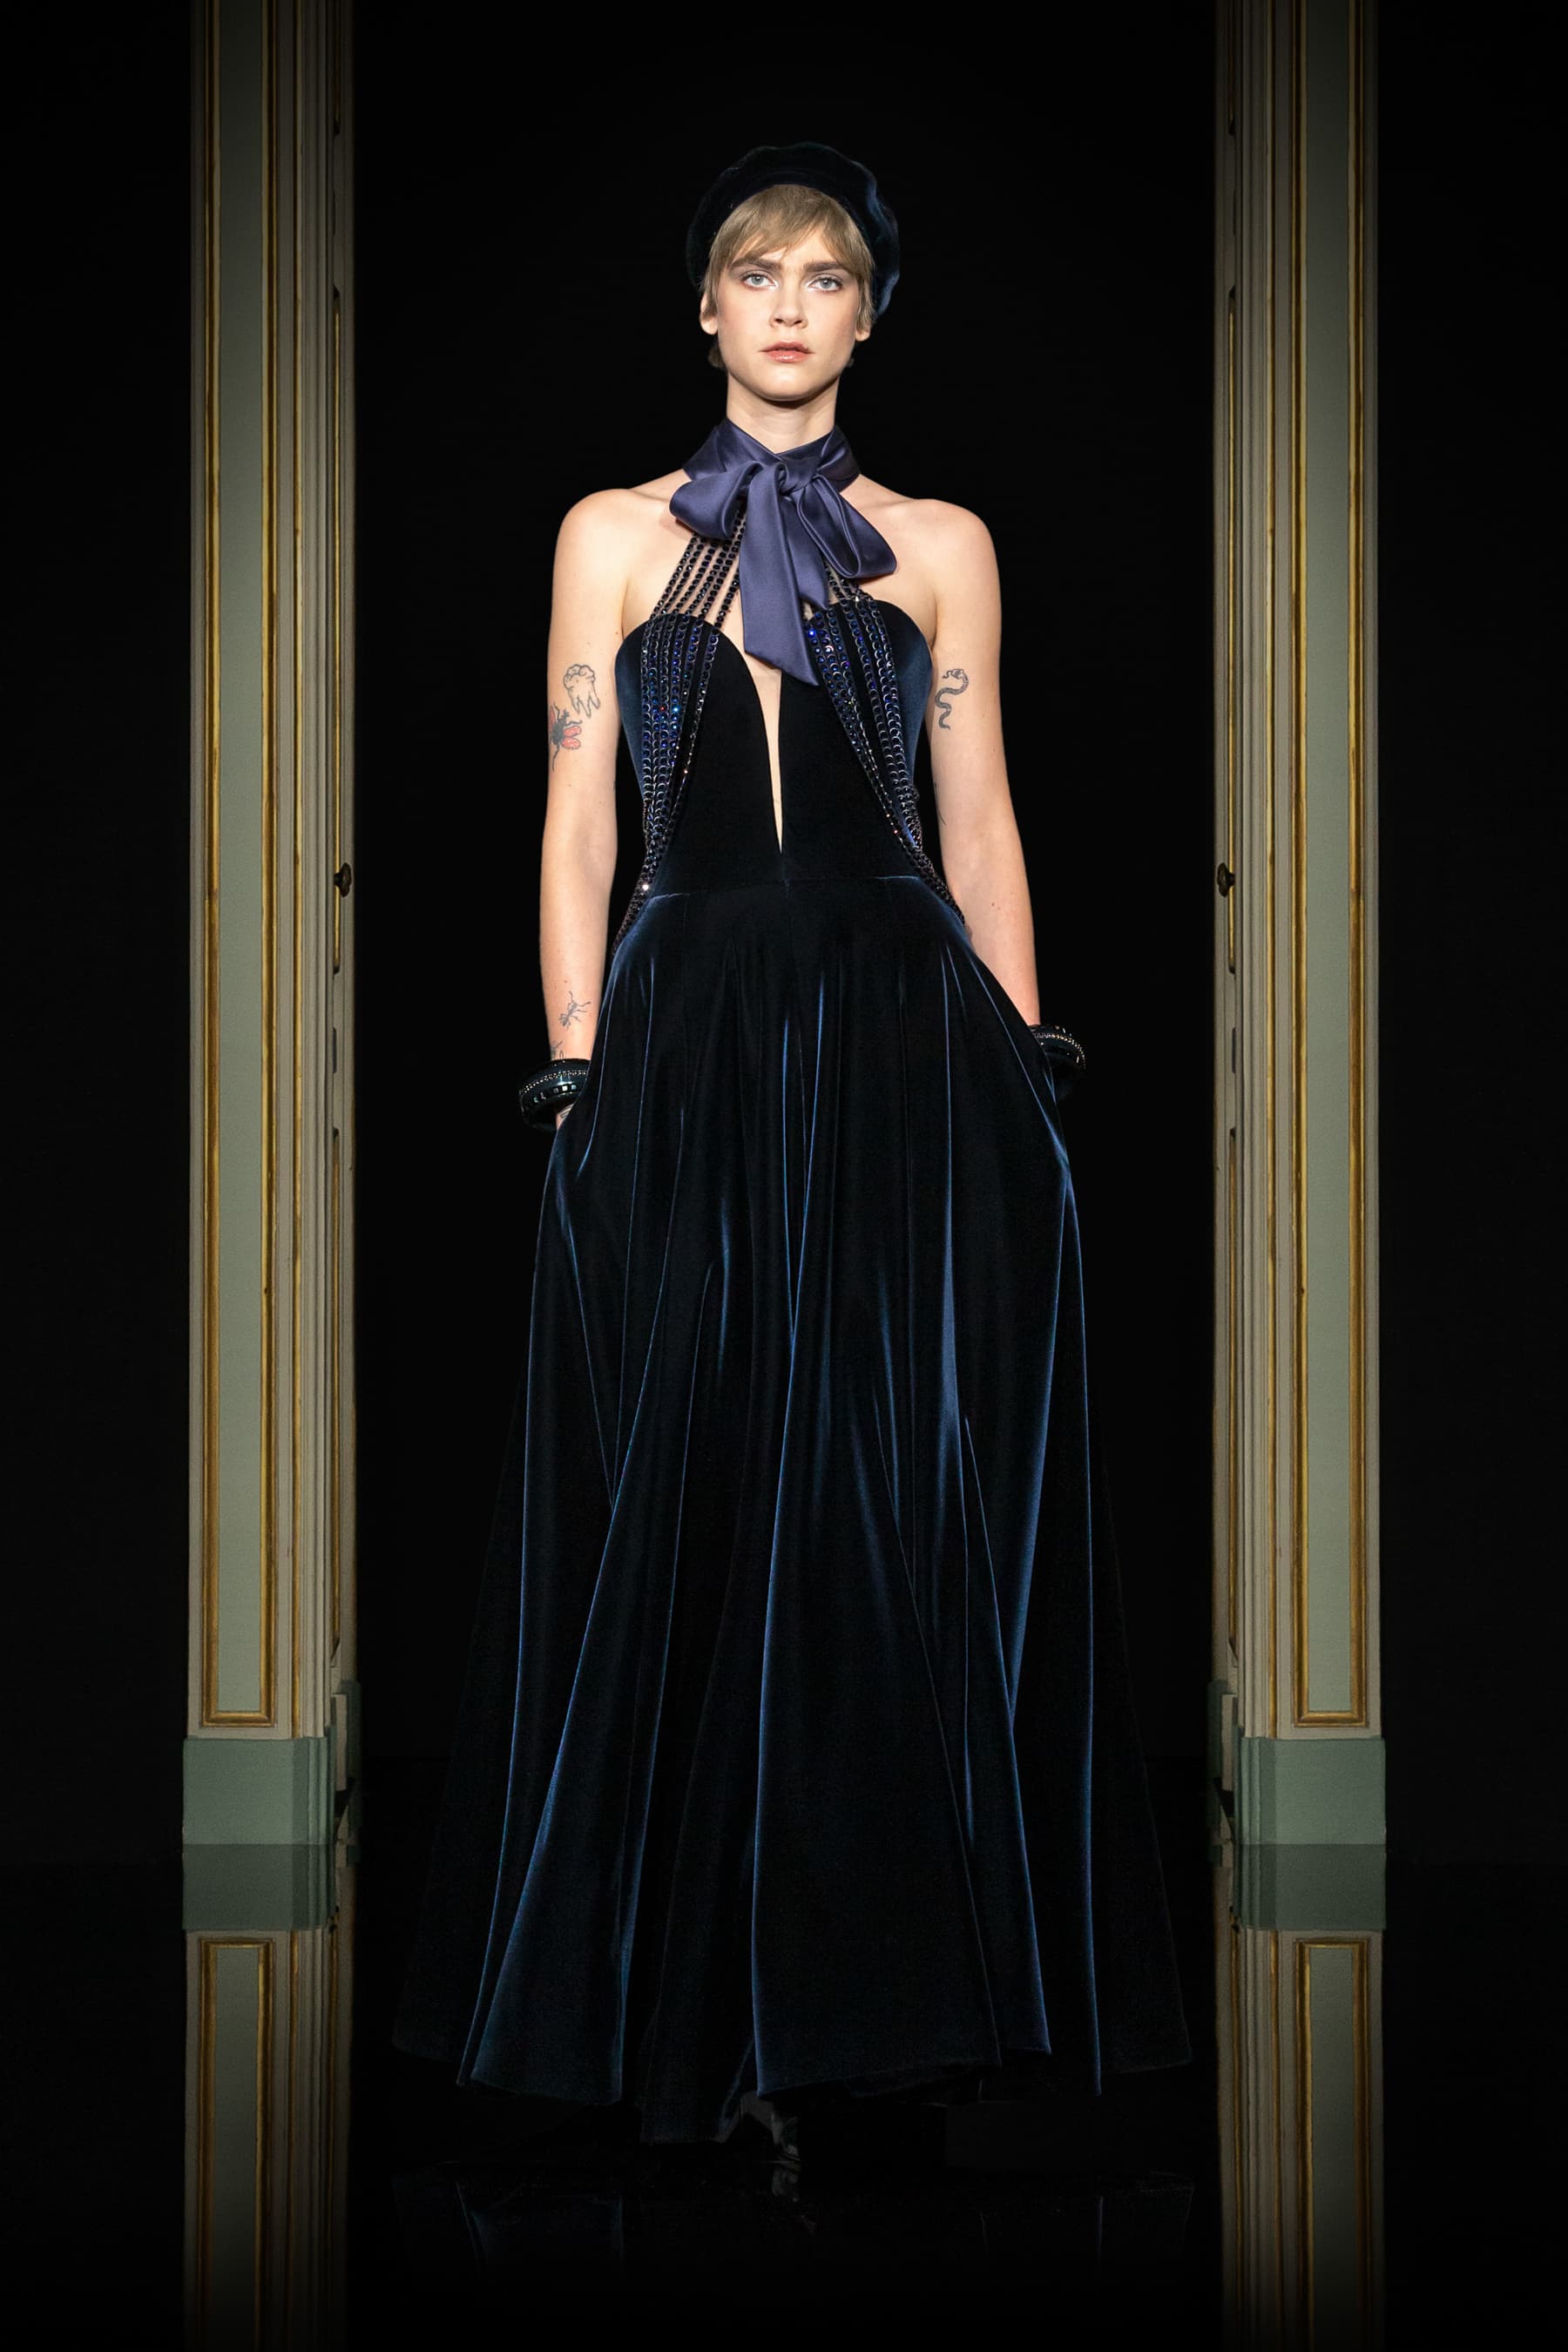 Giorgio Armani's Best Fashion Designs Through the Years